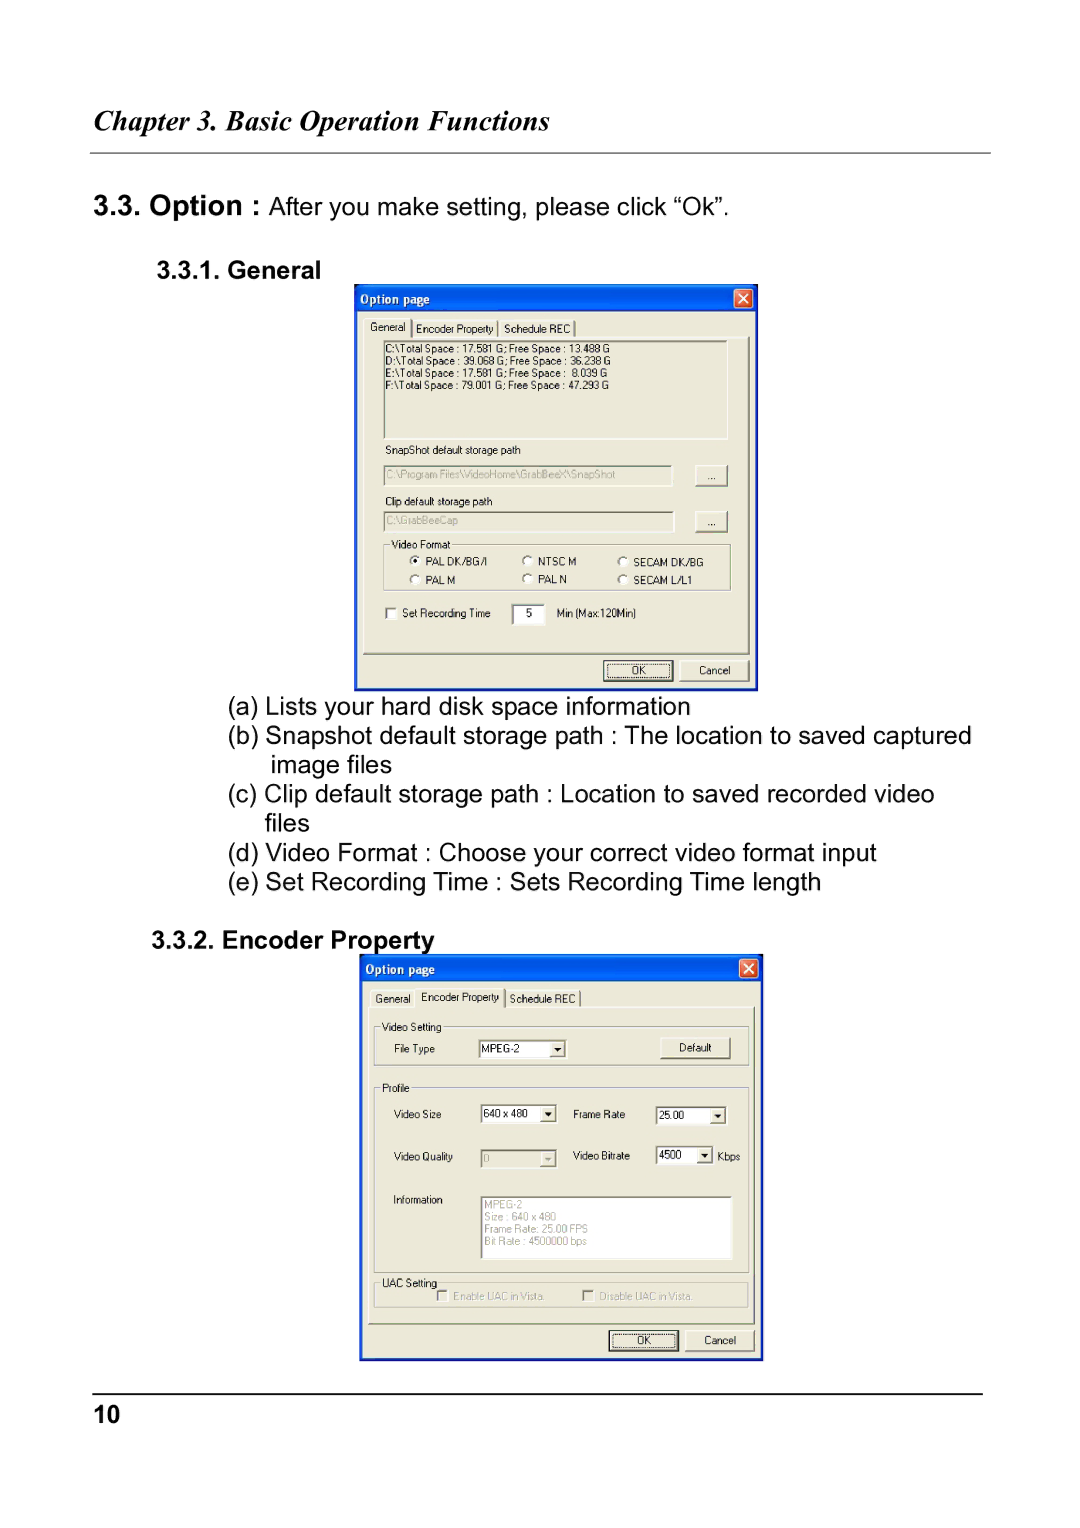 Quatech USB 2.0 user manual Encoder Property 